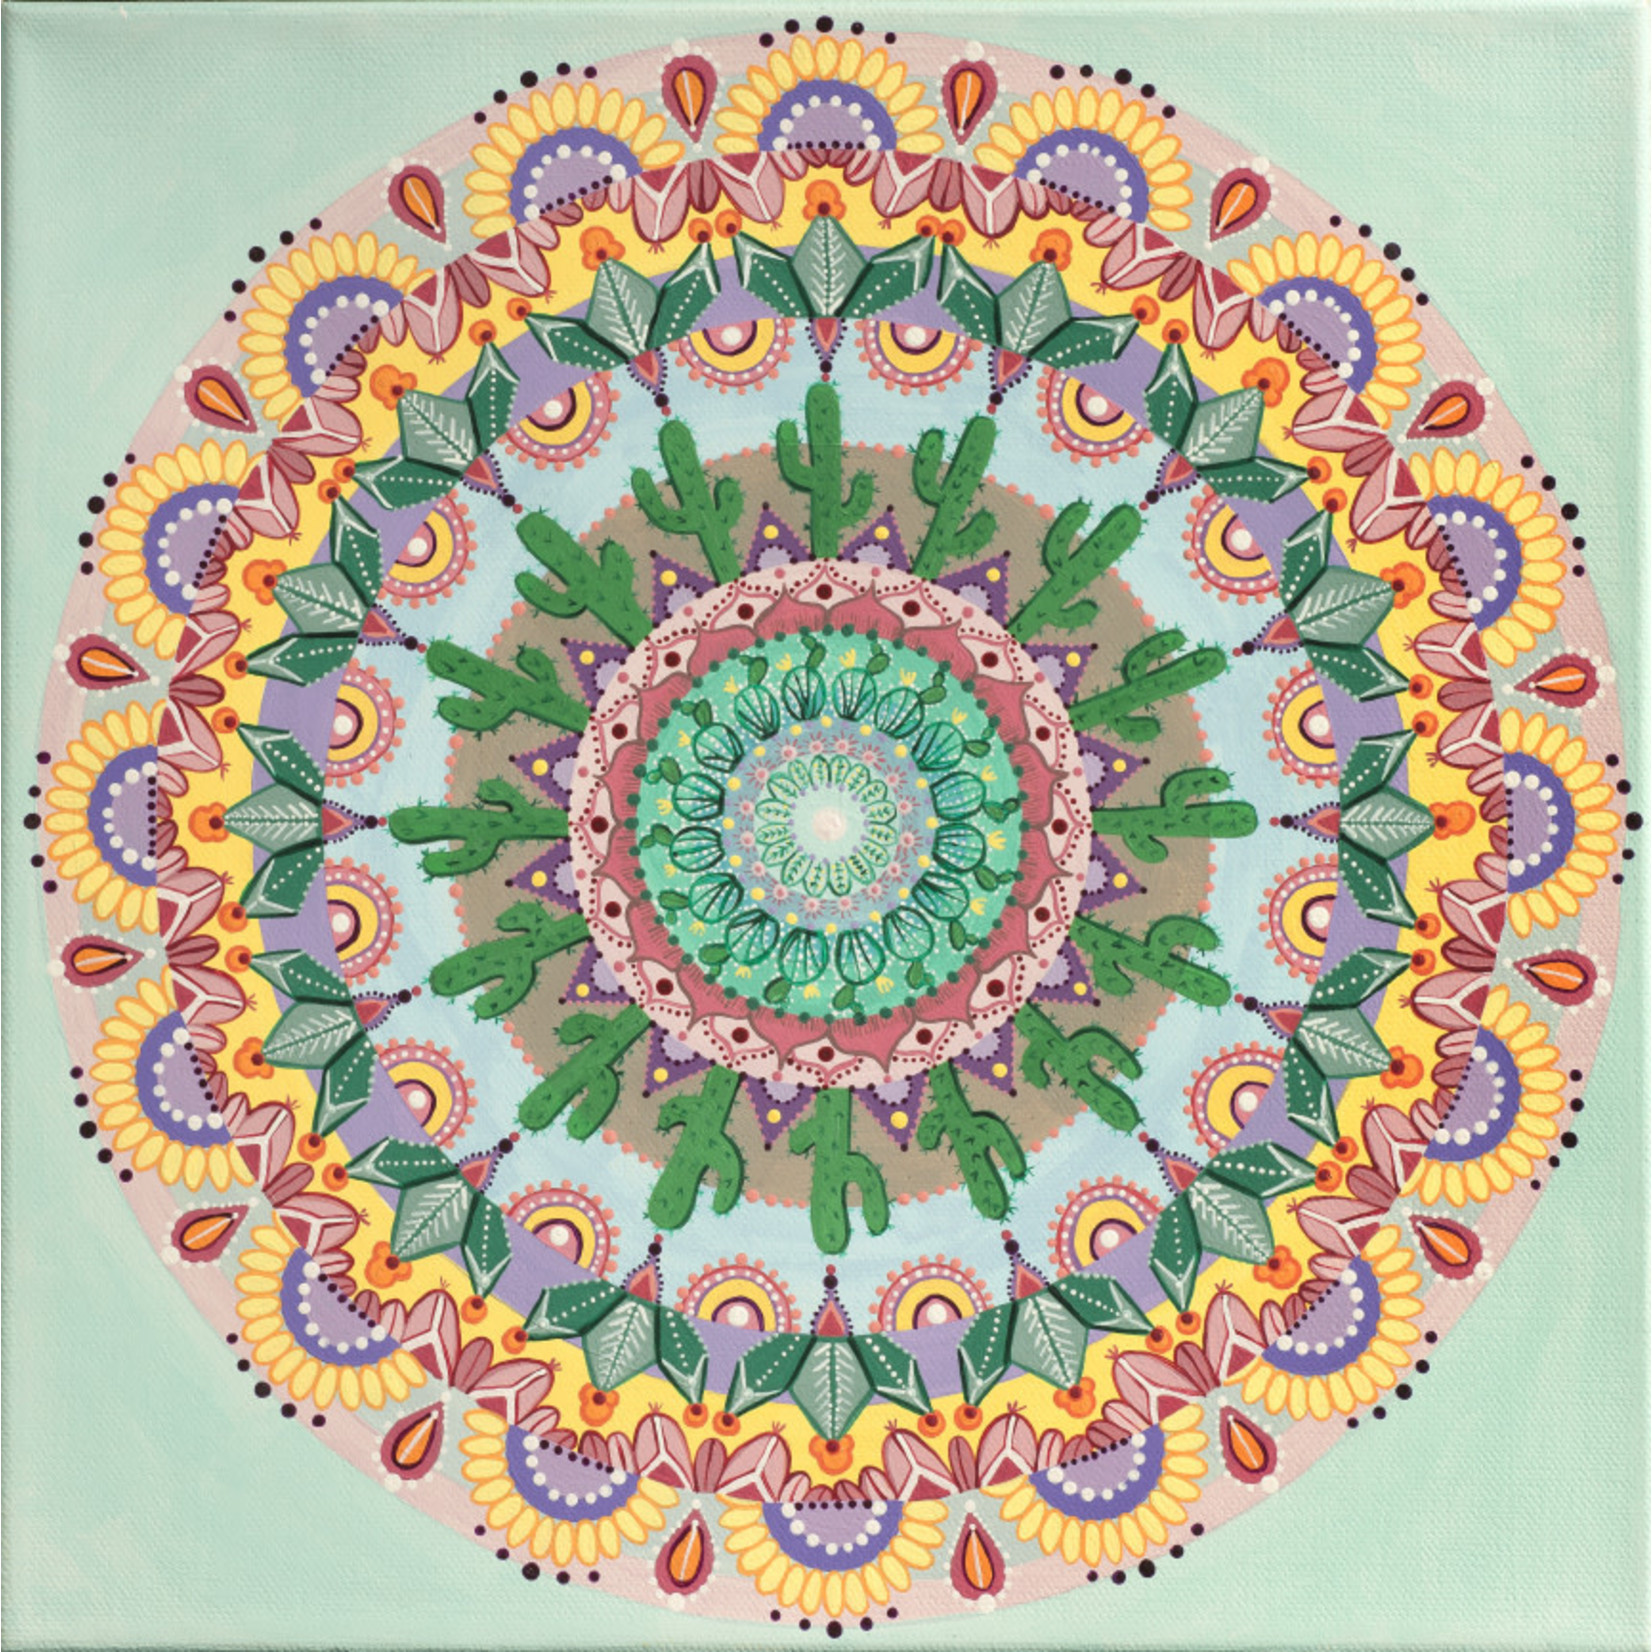 Stirling Studios "Pastel Cactus" Mandala Canvas Print